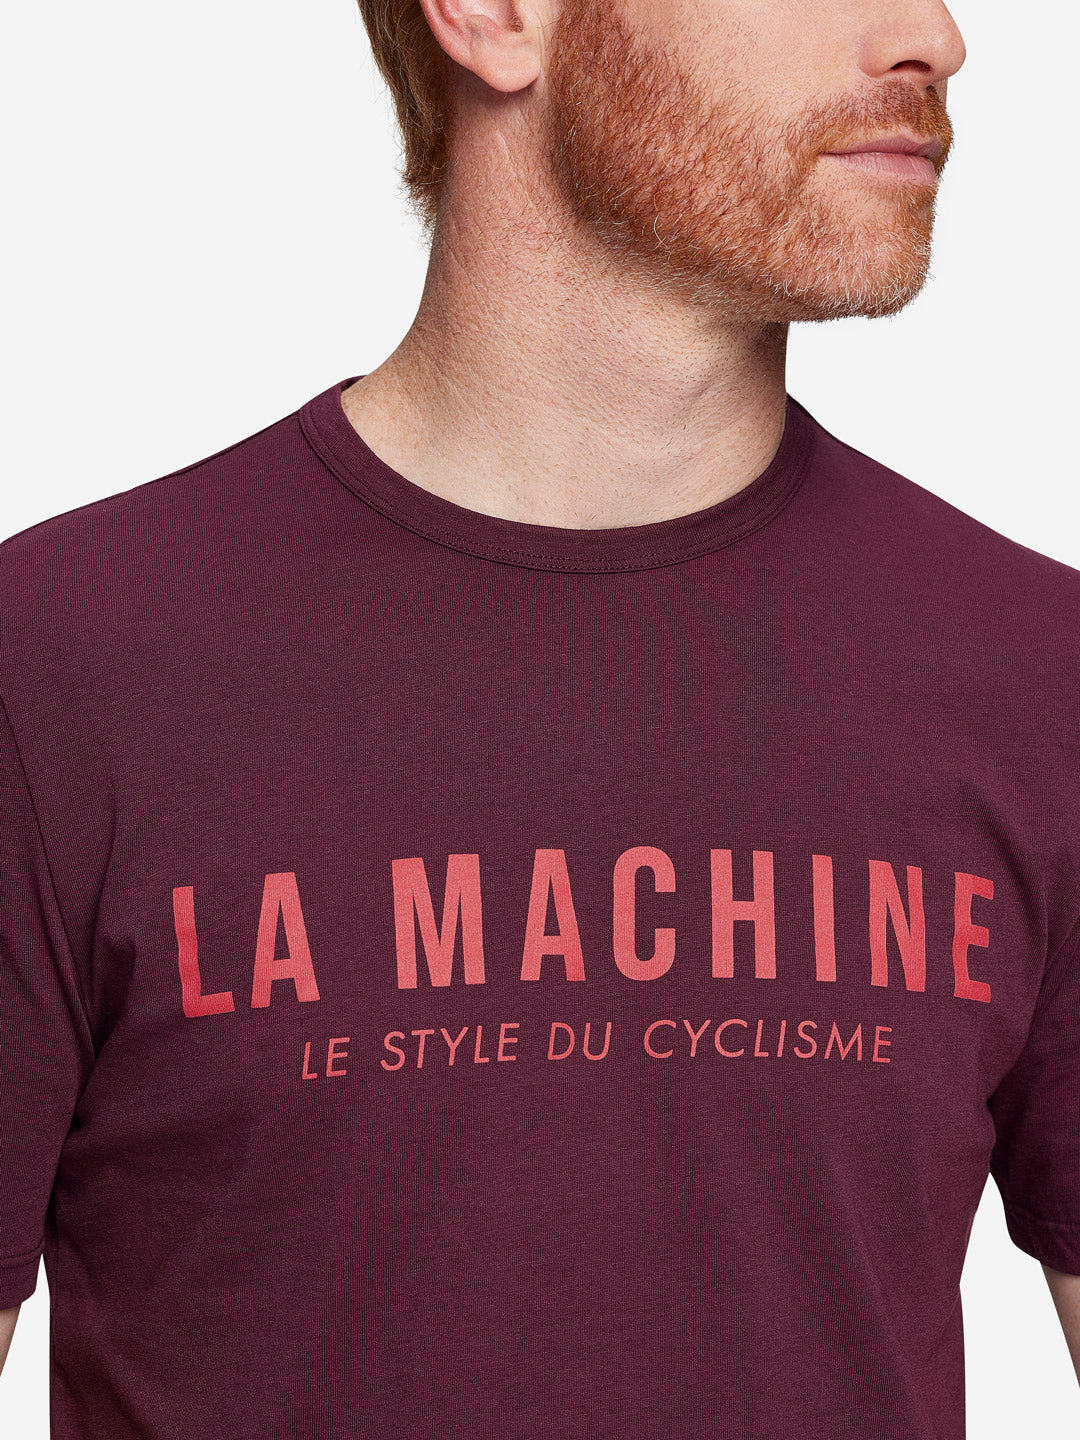 La Machine Logo - T-shirt -  La Machine Cycle Club